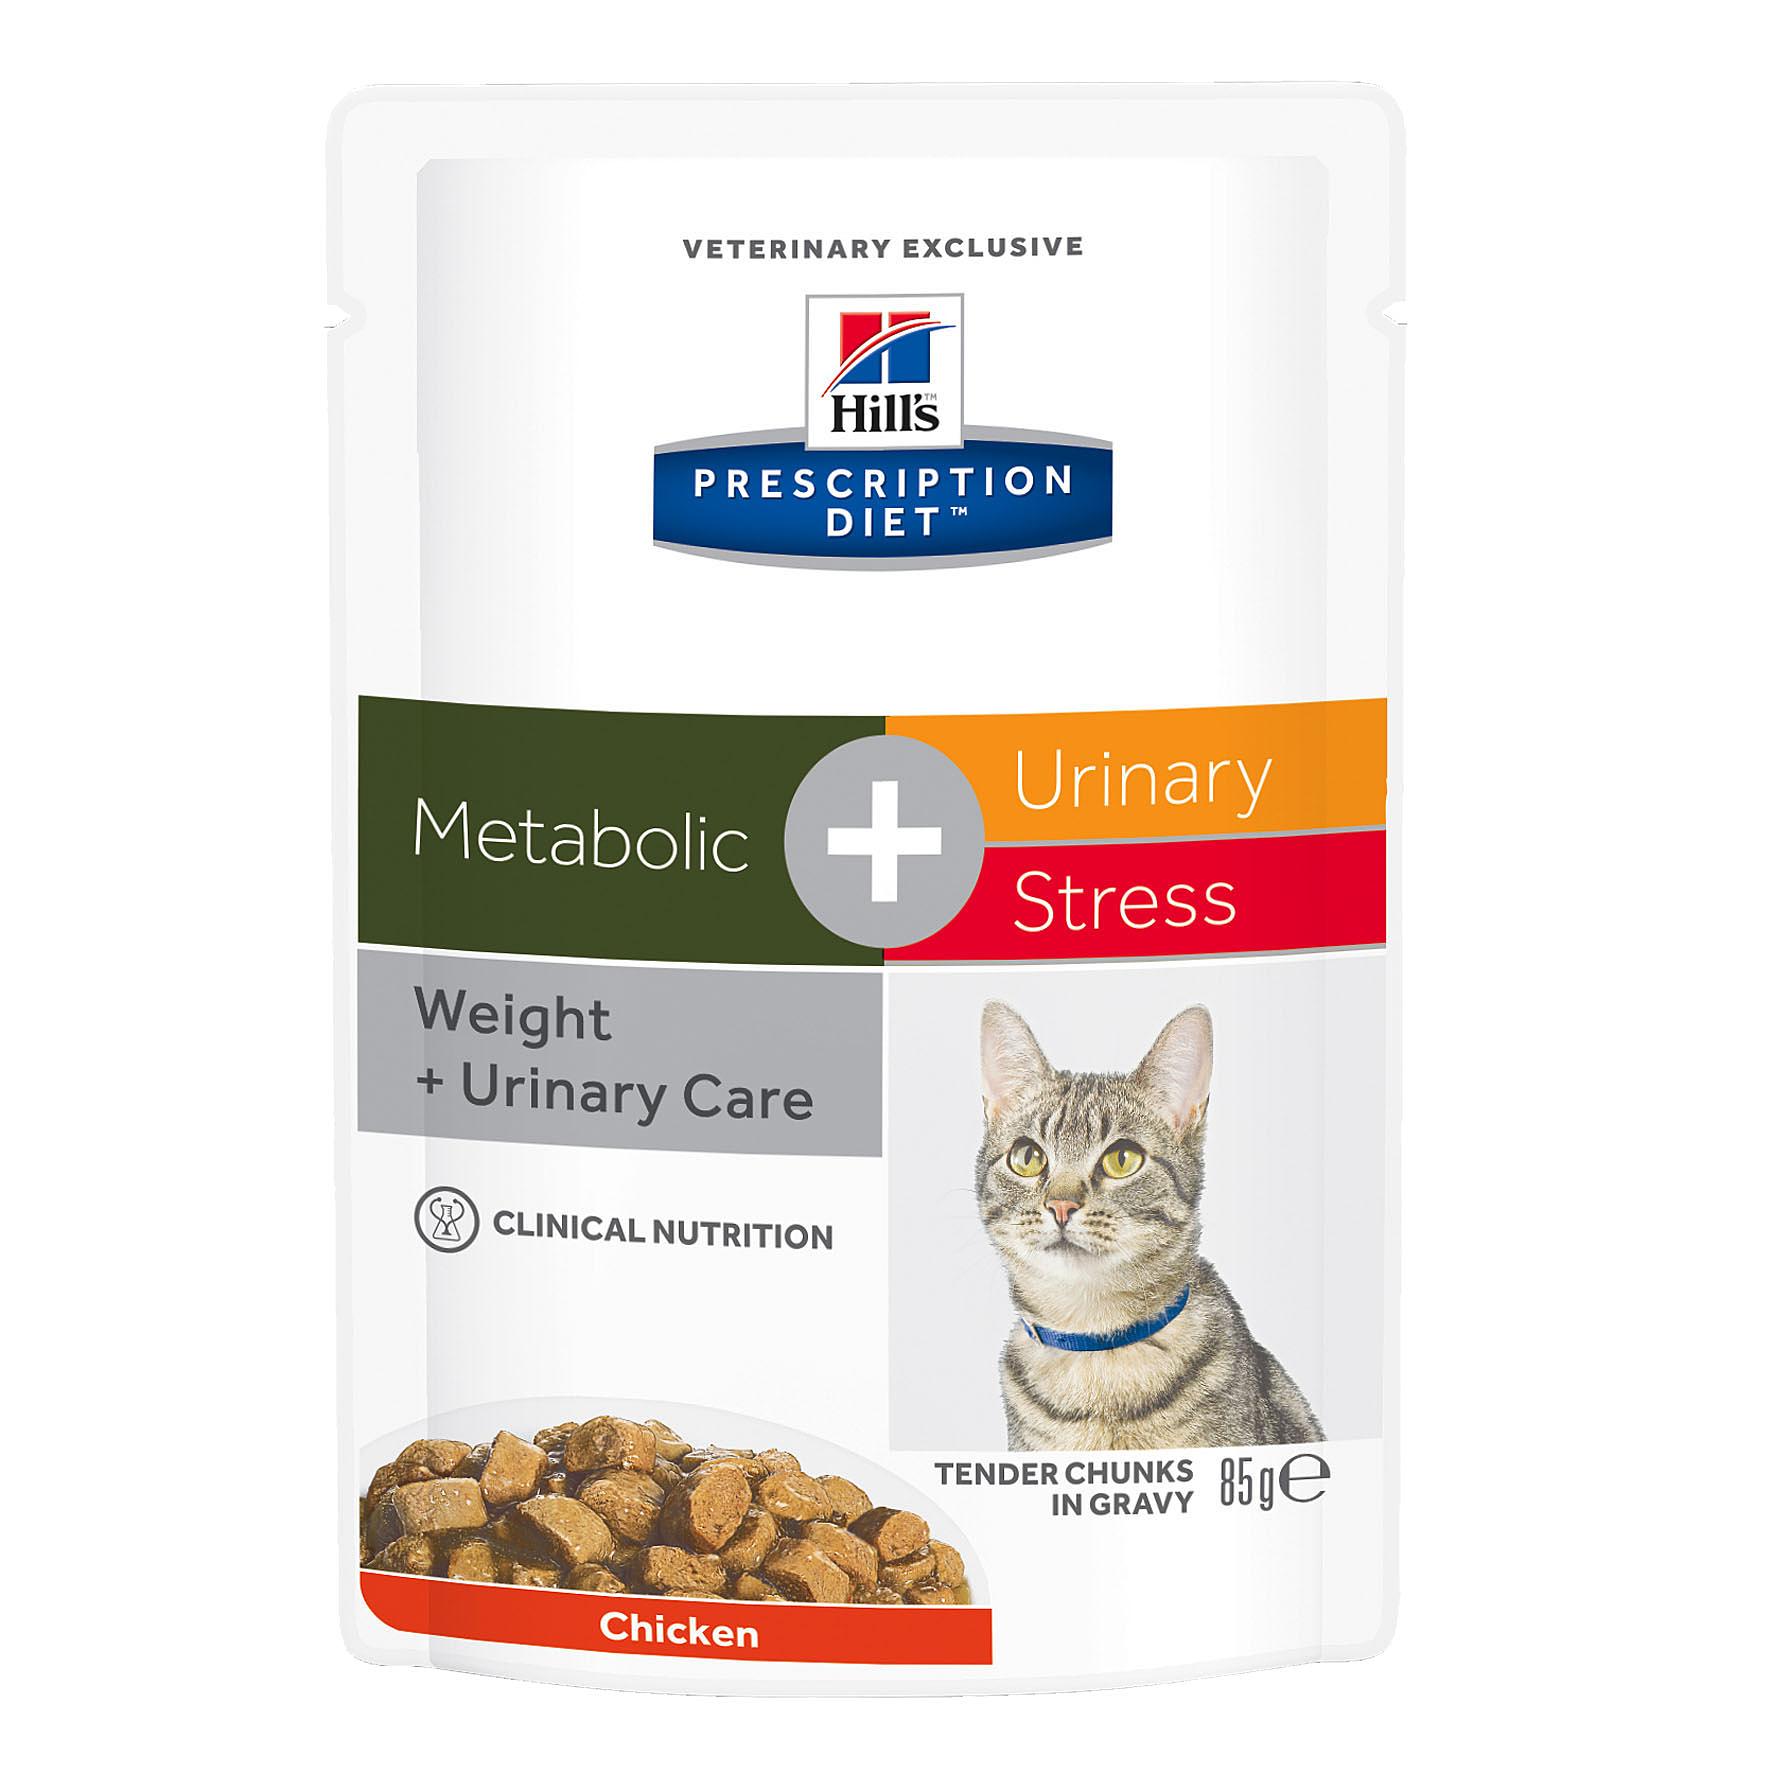 Hill's Prescription Diet Metabolic + Urinary Stress Feline, Chicken